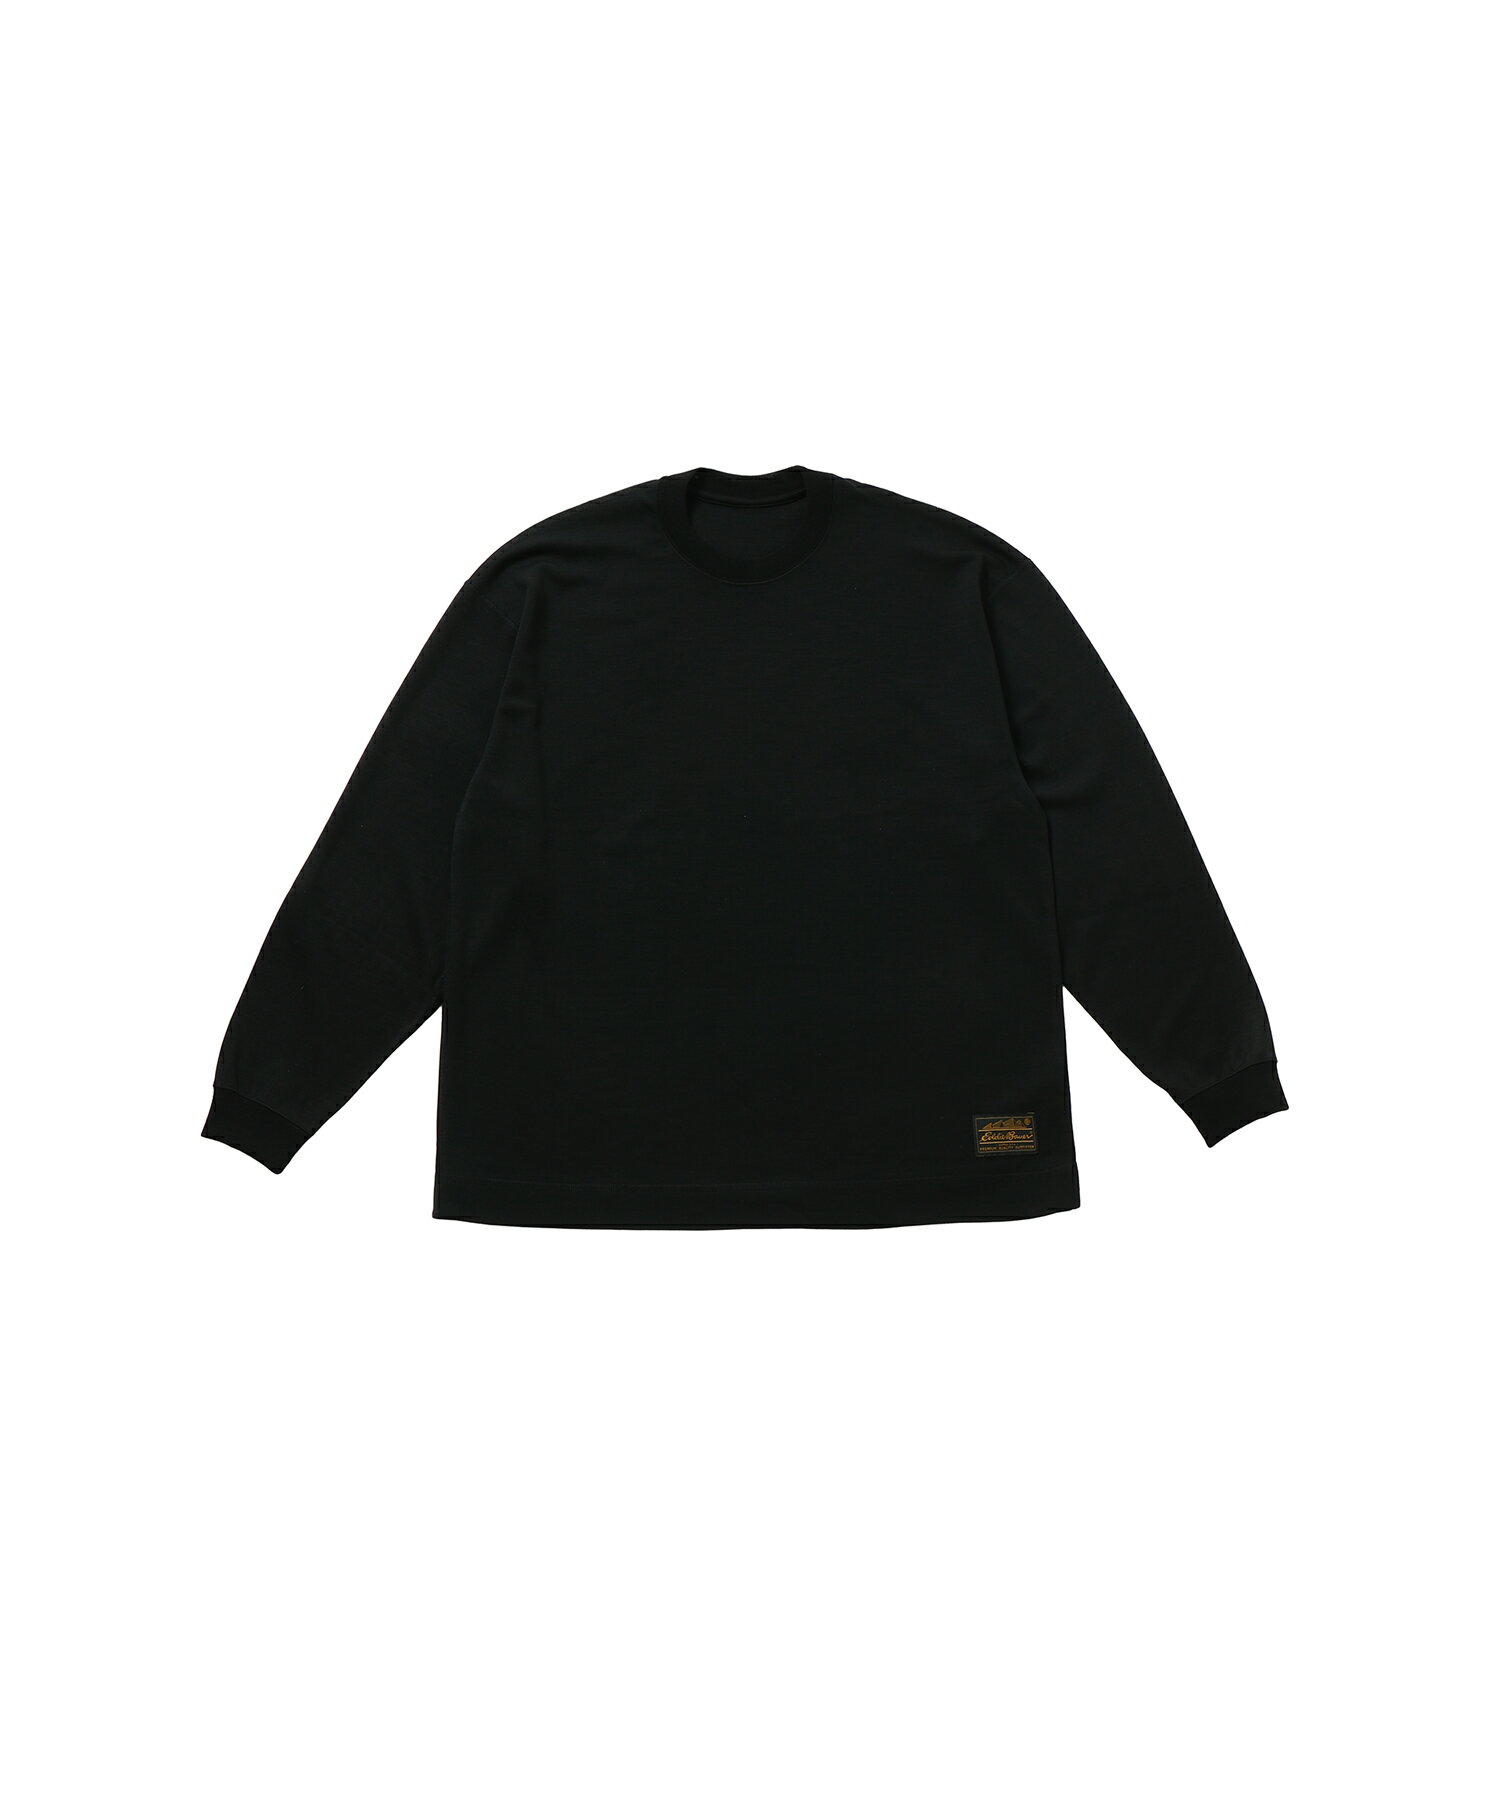 Eddie Bauer Black Tag Collection ALL Purpose Merino Crew Neck Long Sleeve(24SS-M018)国内正規品 メンズ トップス Tシャツ 長袖 ストリート カジュアル シンプル ブラック ネイビー